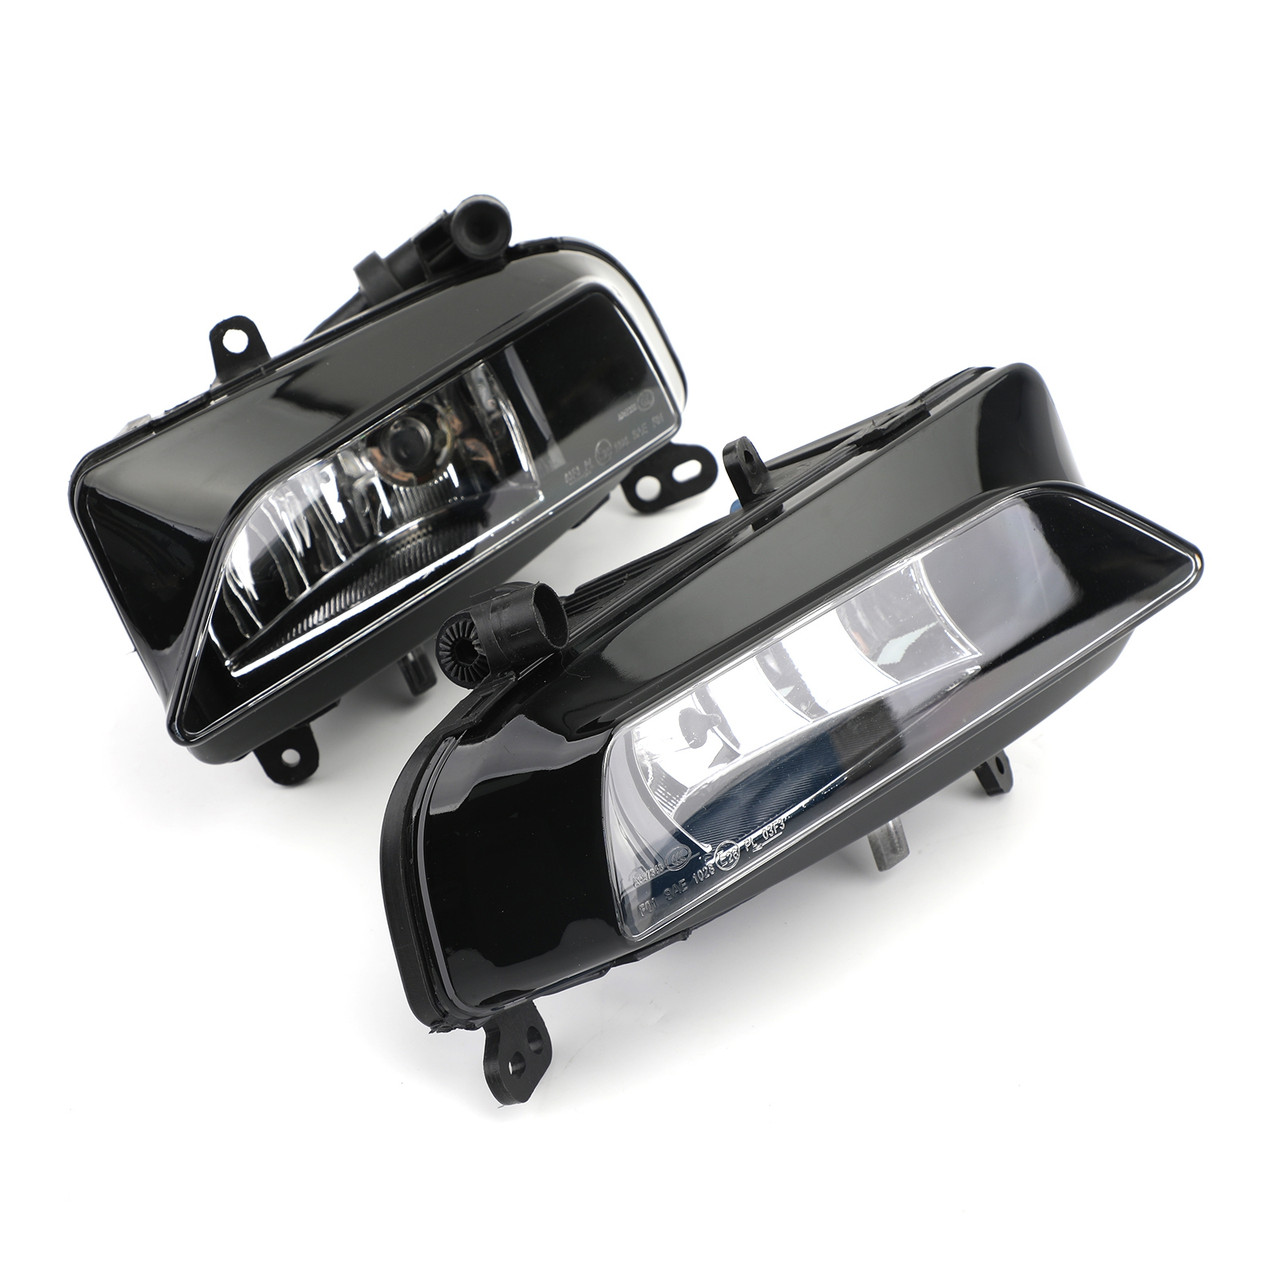 Pair Front Light Halogen Fog Lamp FIT For AUDI S5 A5-S Line 13-16 Black